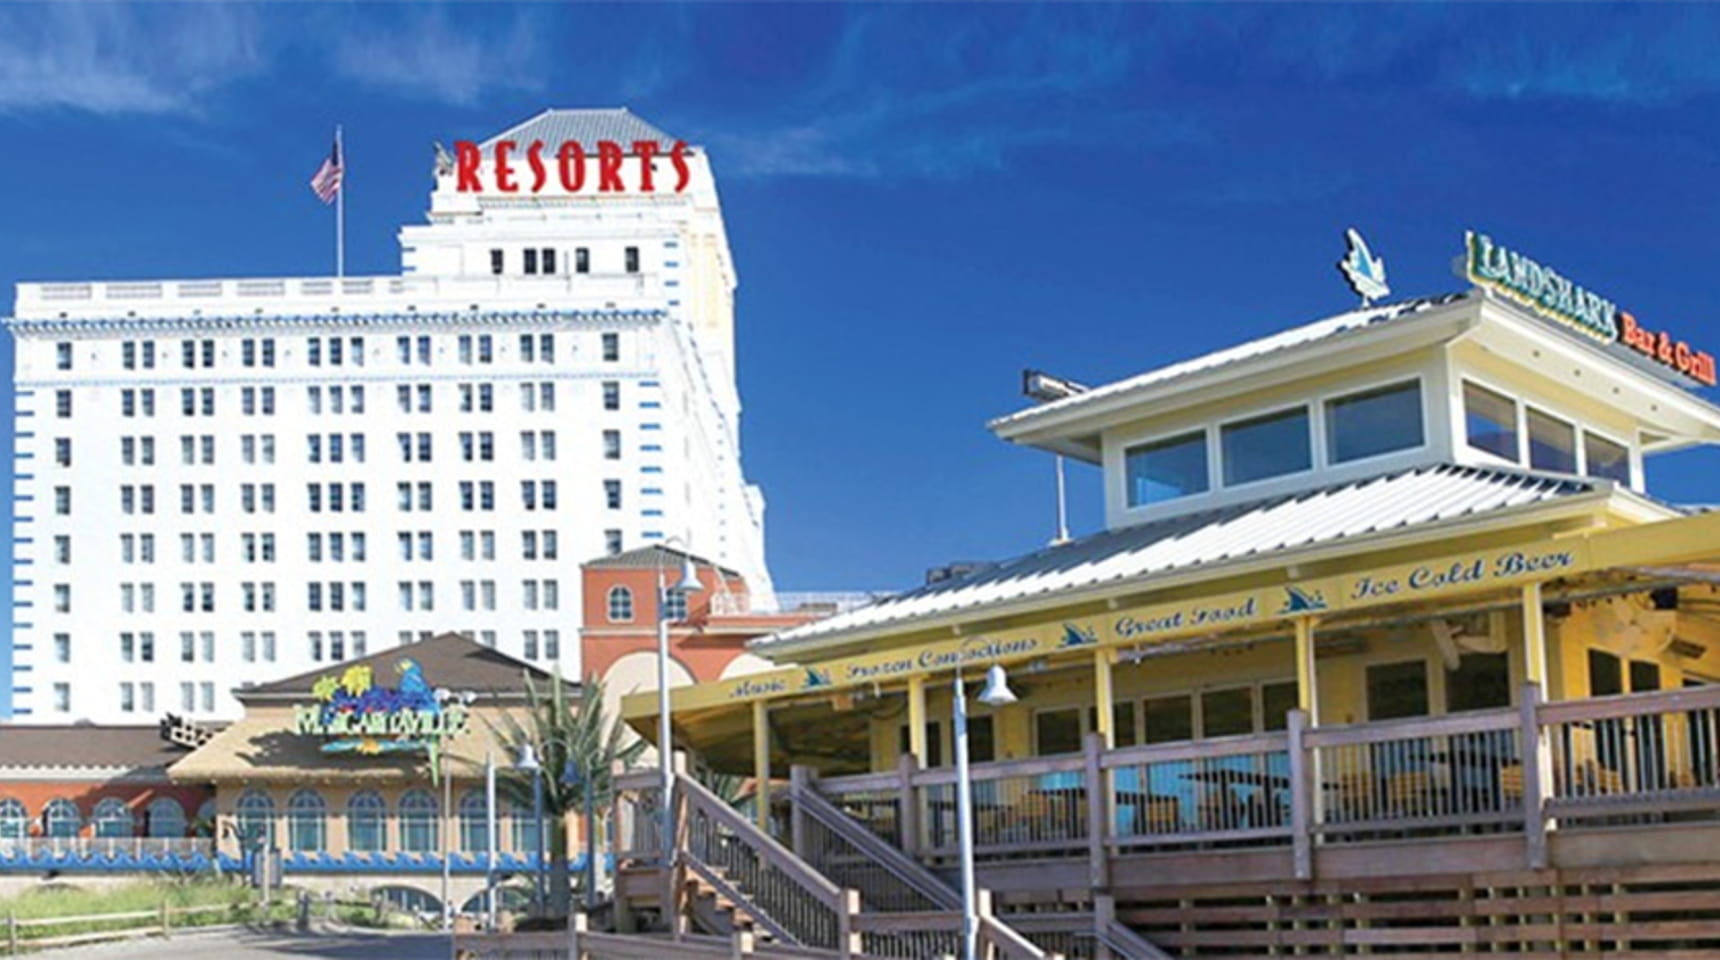 resorts casino atlantic city